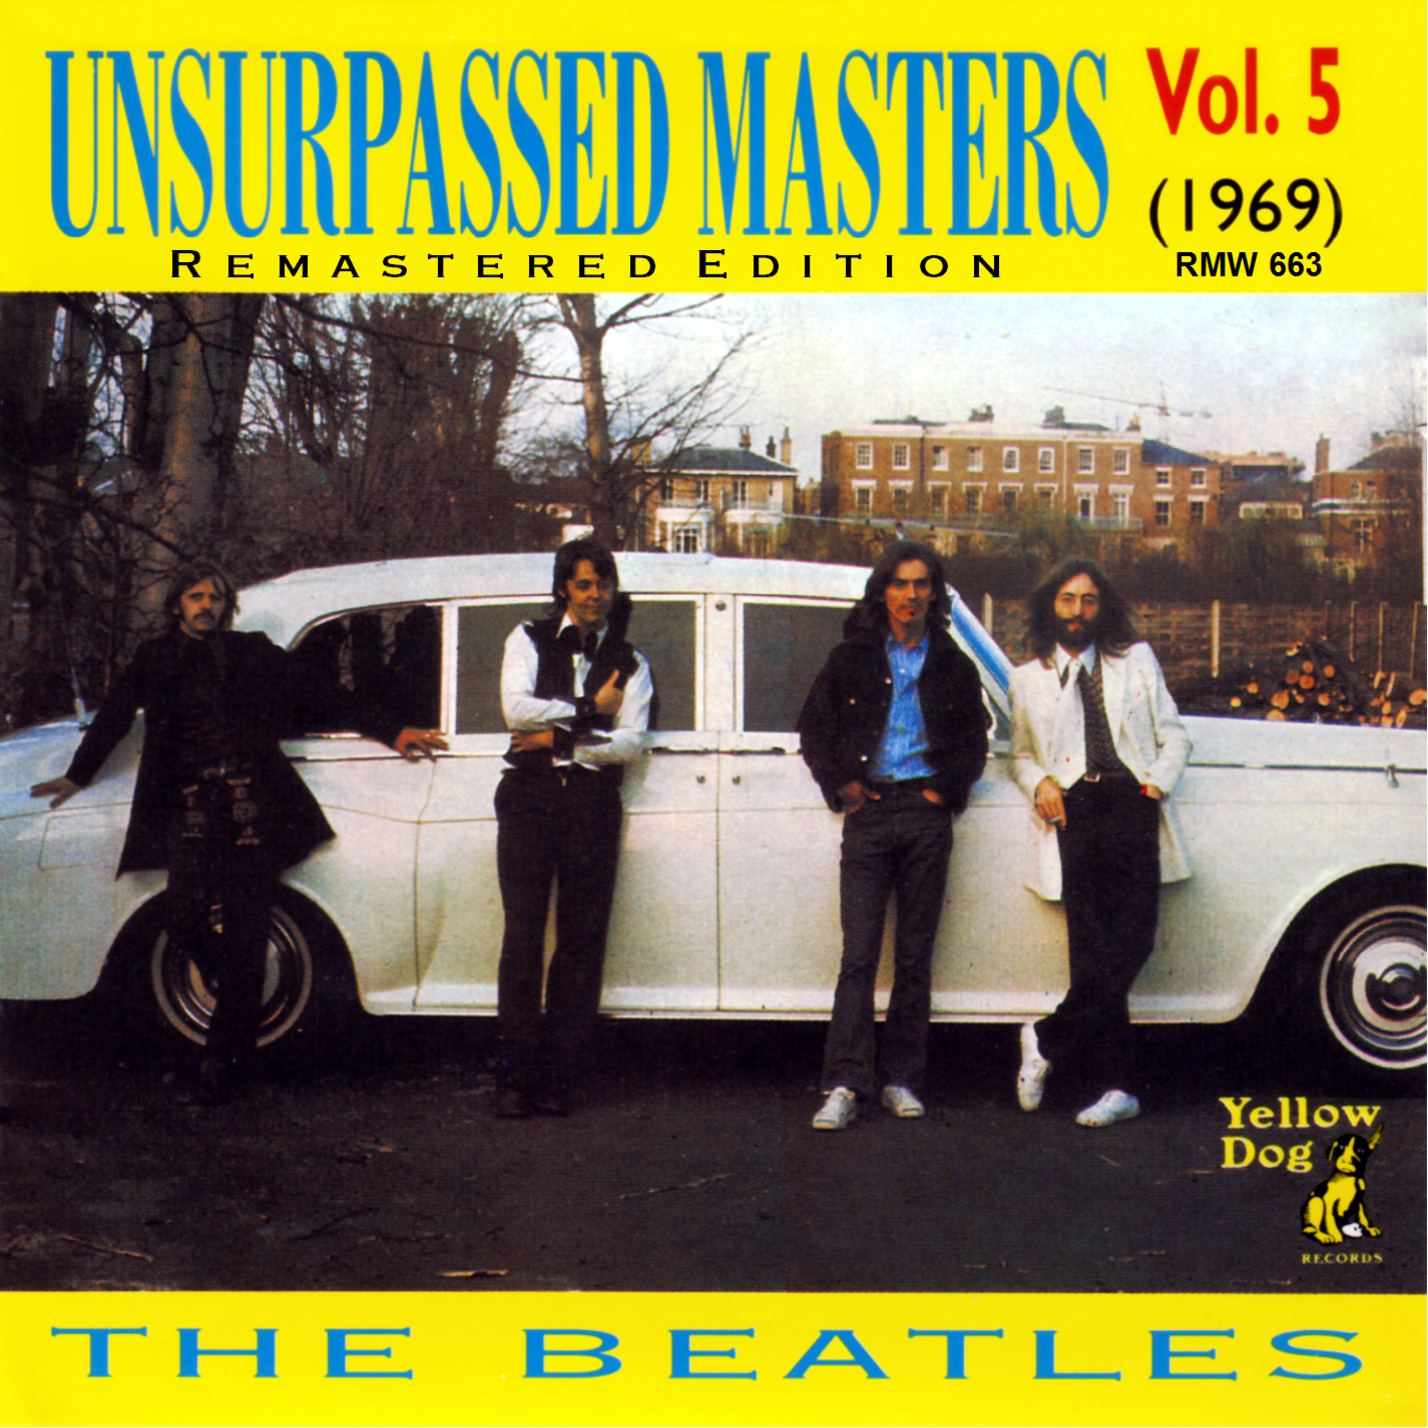 Beatles196xUnsurpassedMastersVol5 (2).png